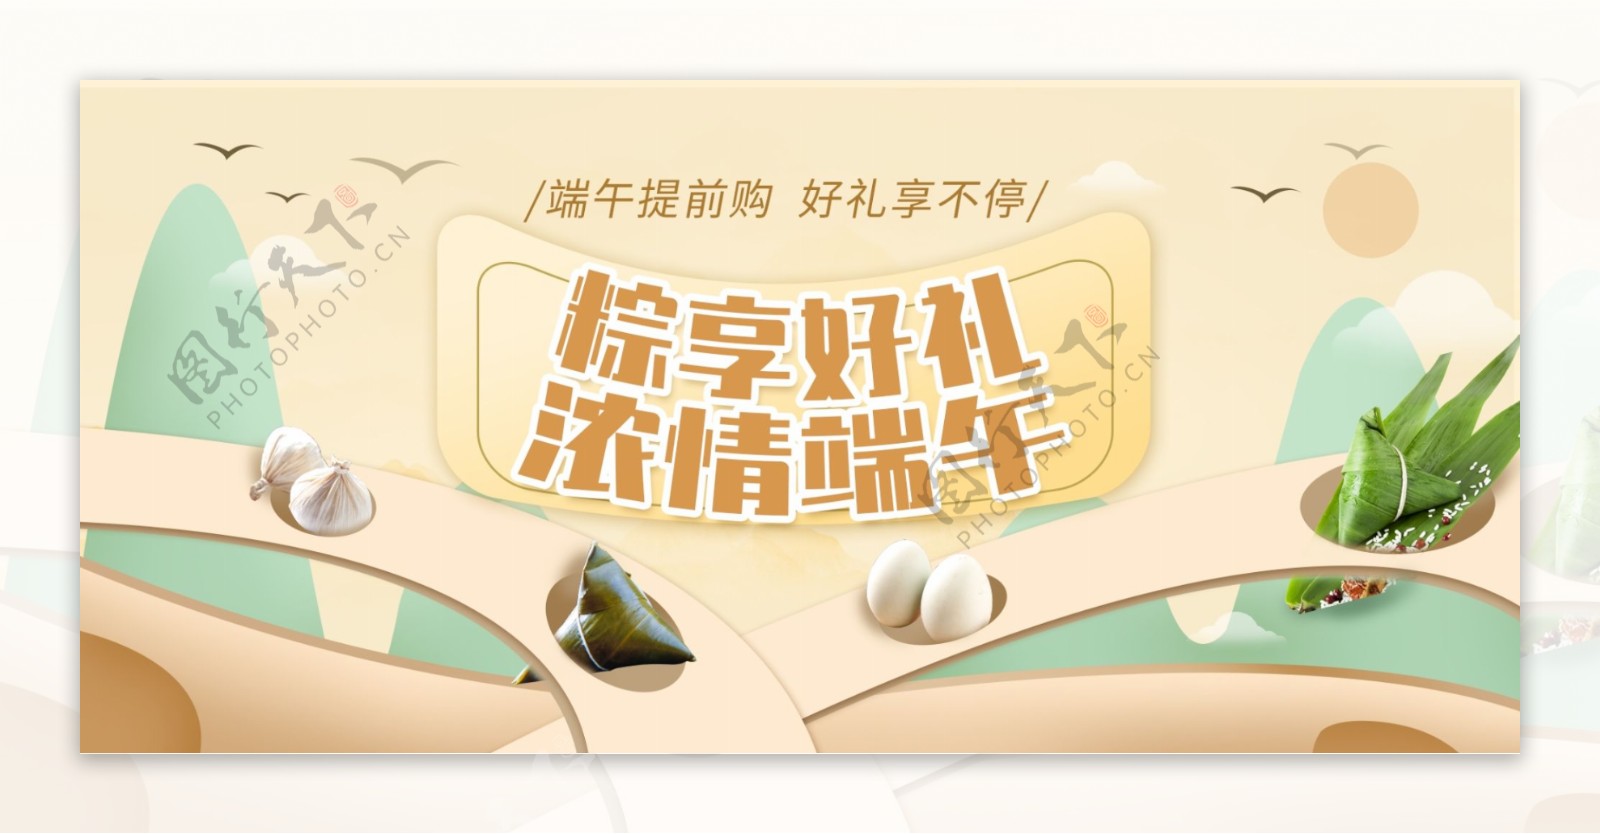 端午节粽子食品banner